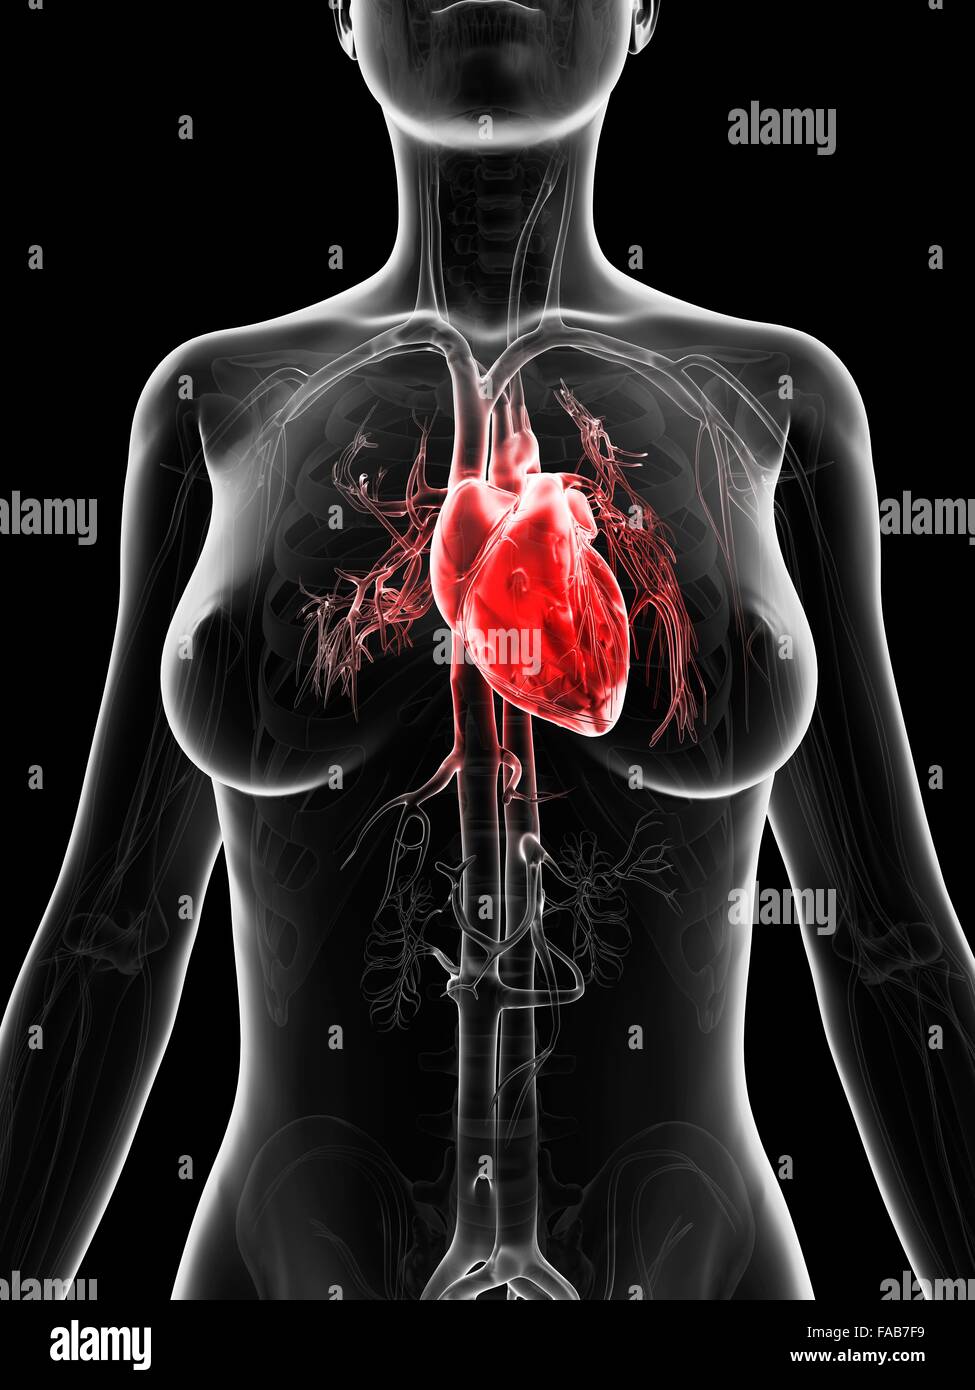 Human heart, computer illustration Stock Photo - Alamy